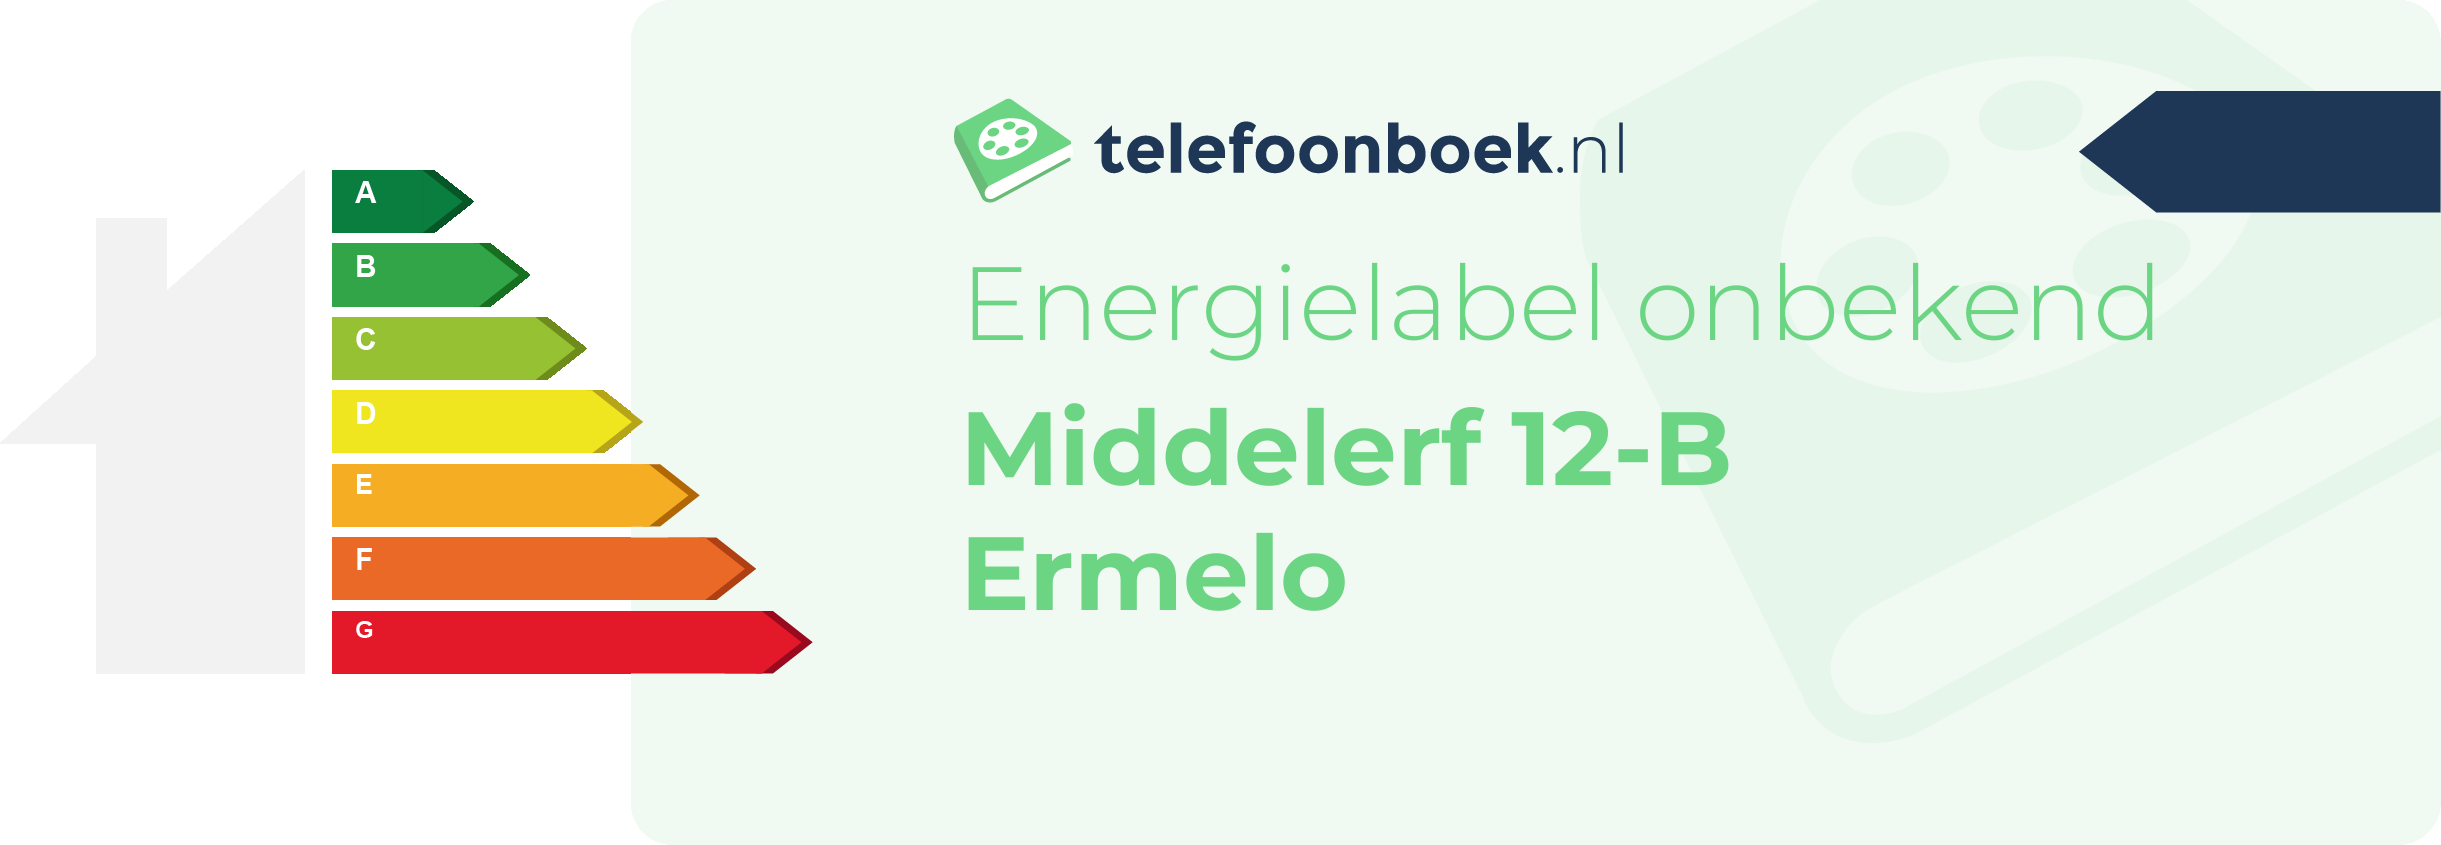 Energielabel Middelerf 12-B Ermelo